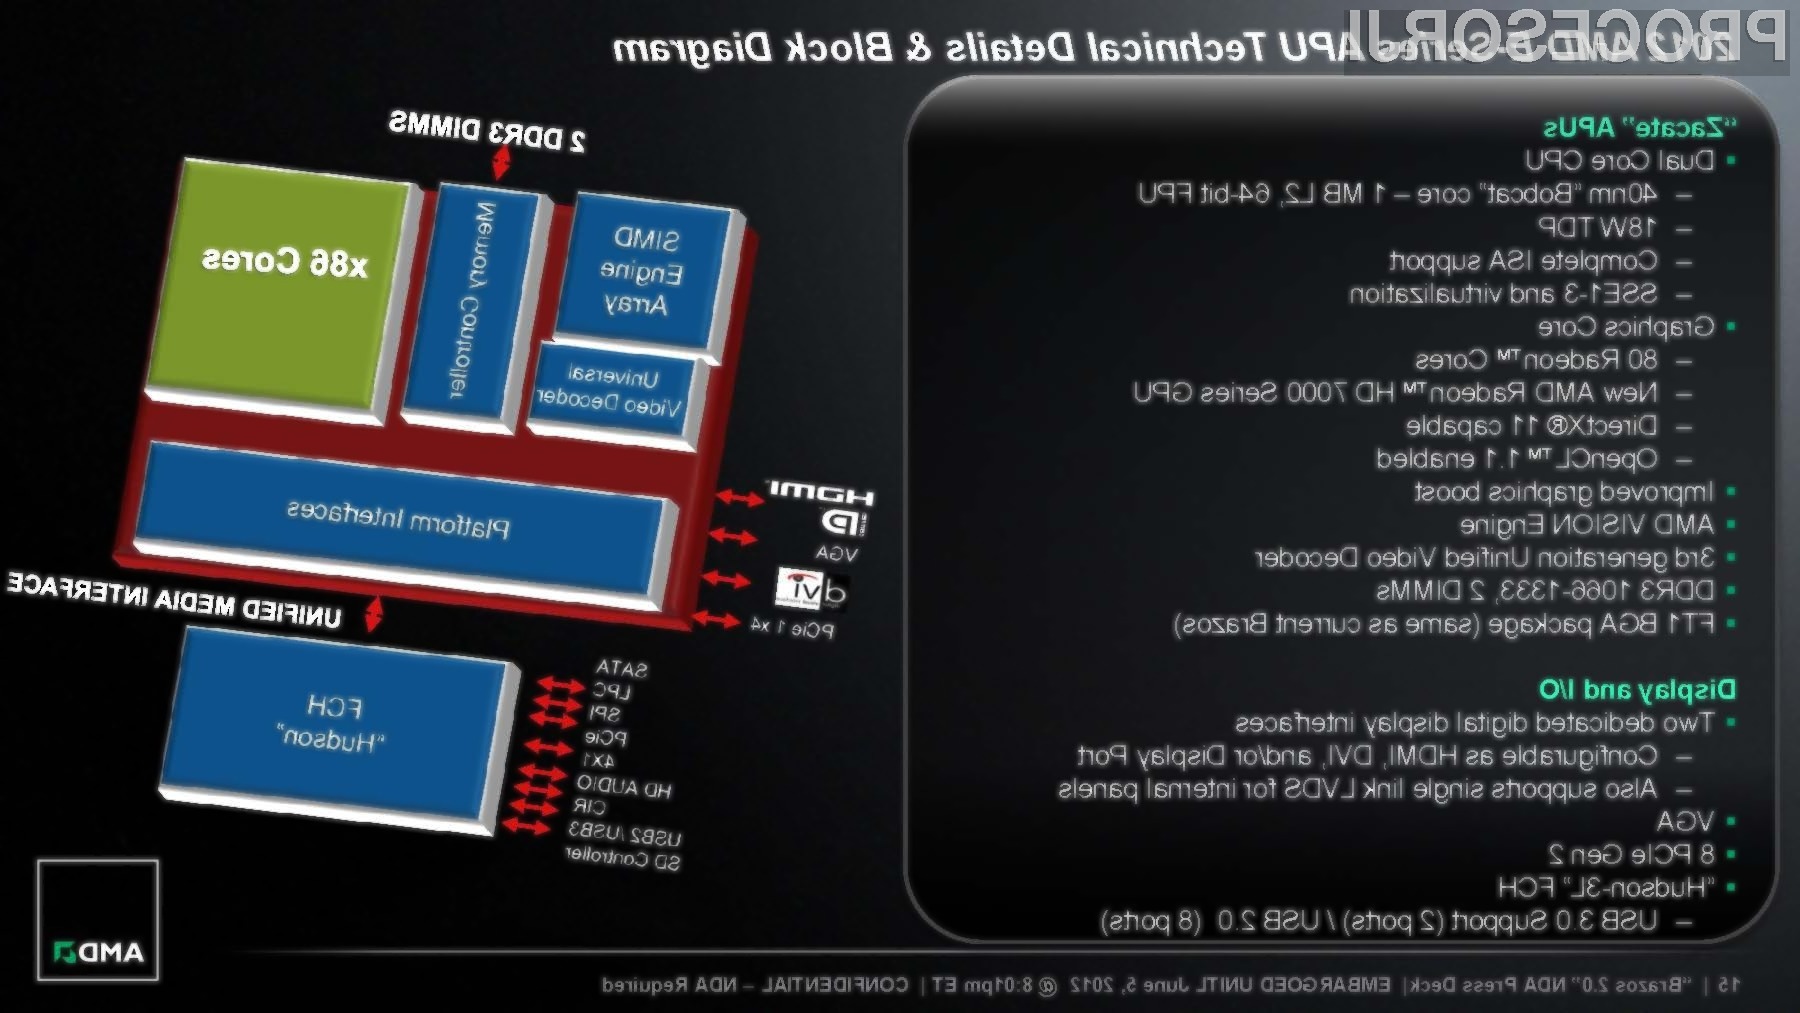 AMD e1 1200 APU. AMD Hudson-2 FCH. AMD e450 APU характеристики. AMD Hudson 1. Amd e450